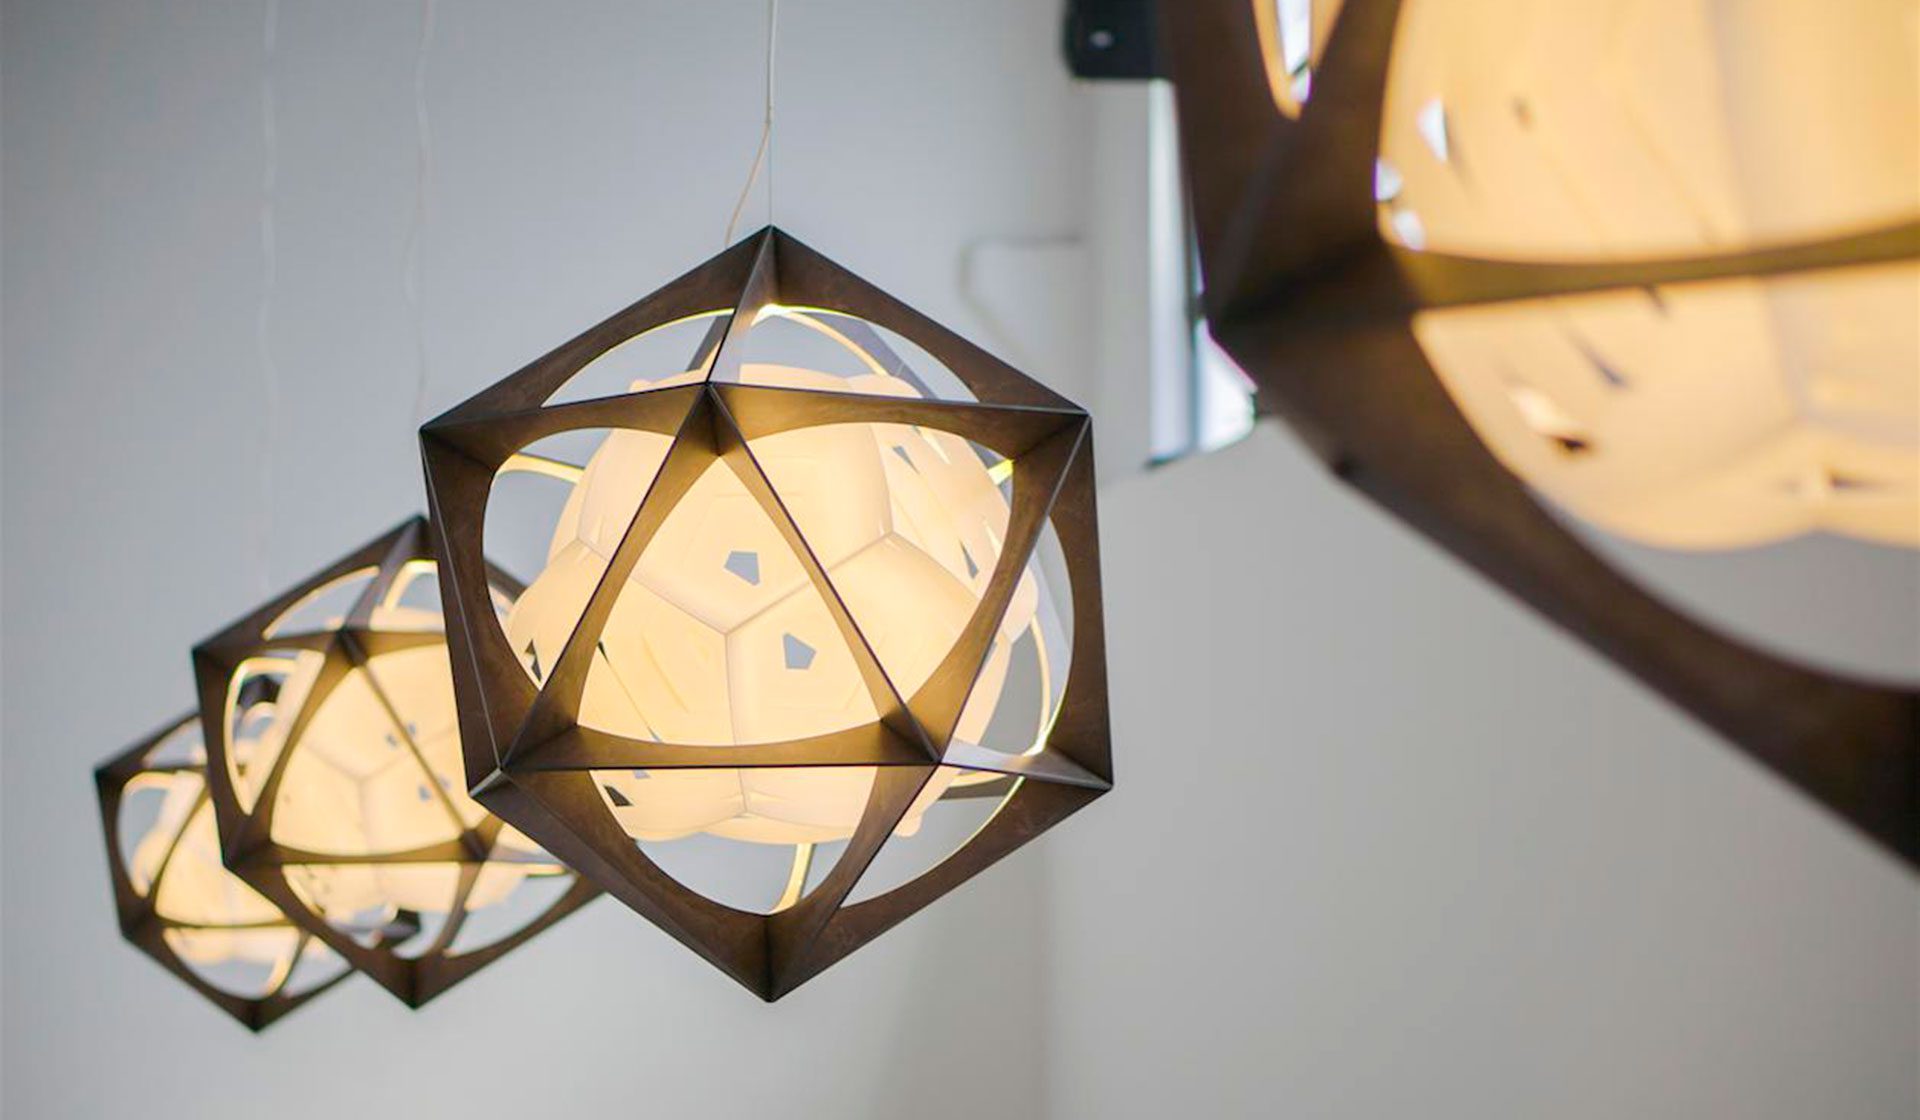 Louis Polsen OE Quasi light designed by Studio Olafur Eliasson